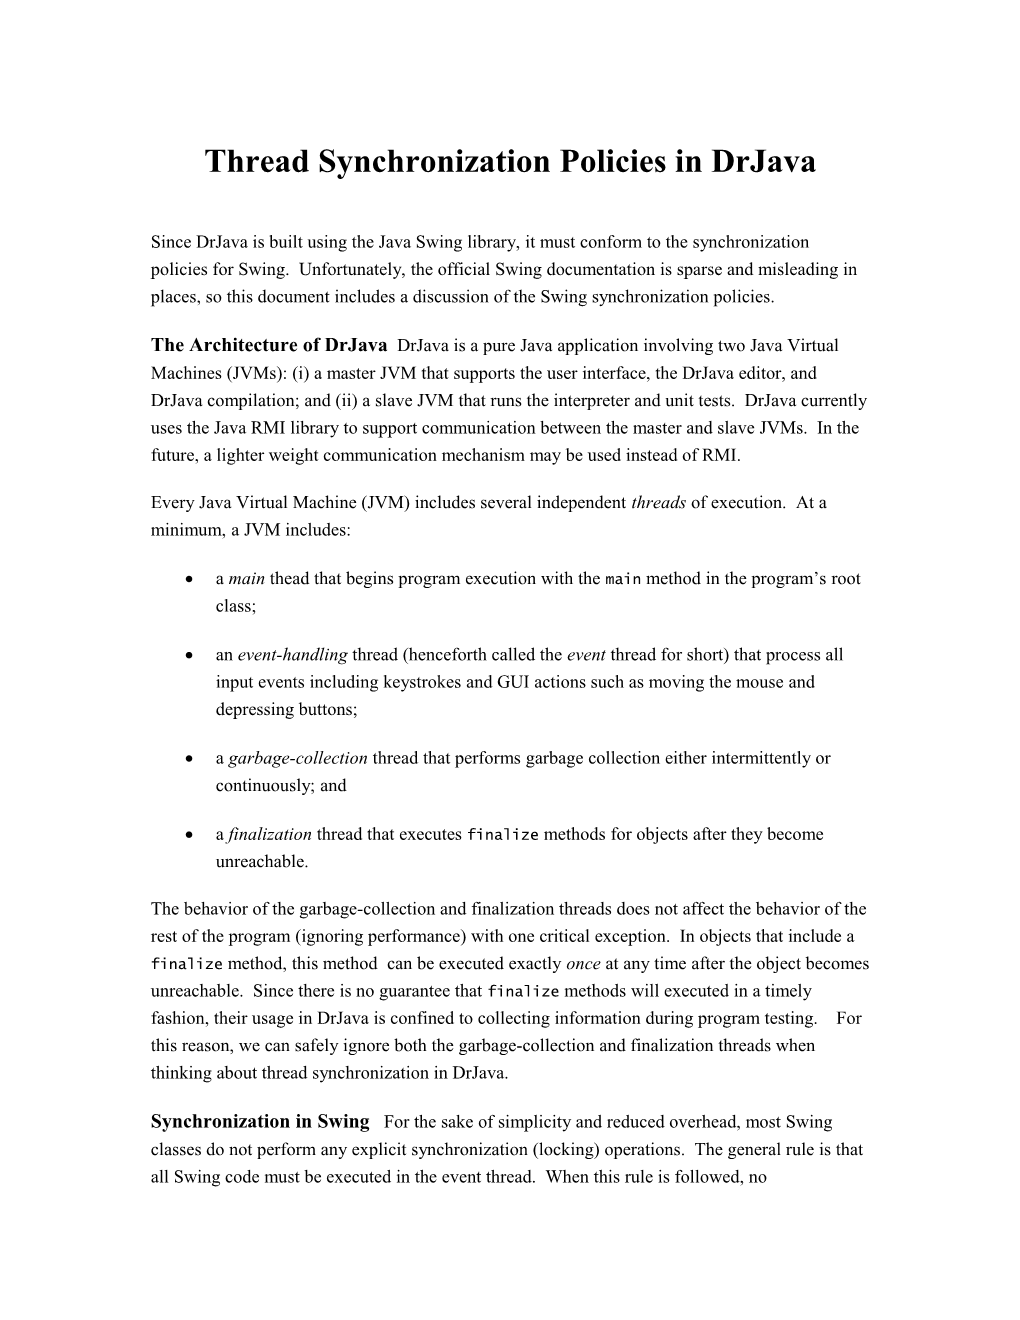 Thread Synchronization Policies in Drjava